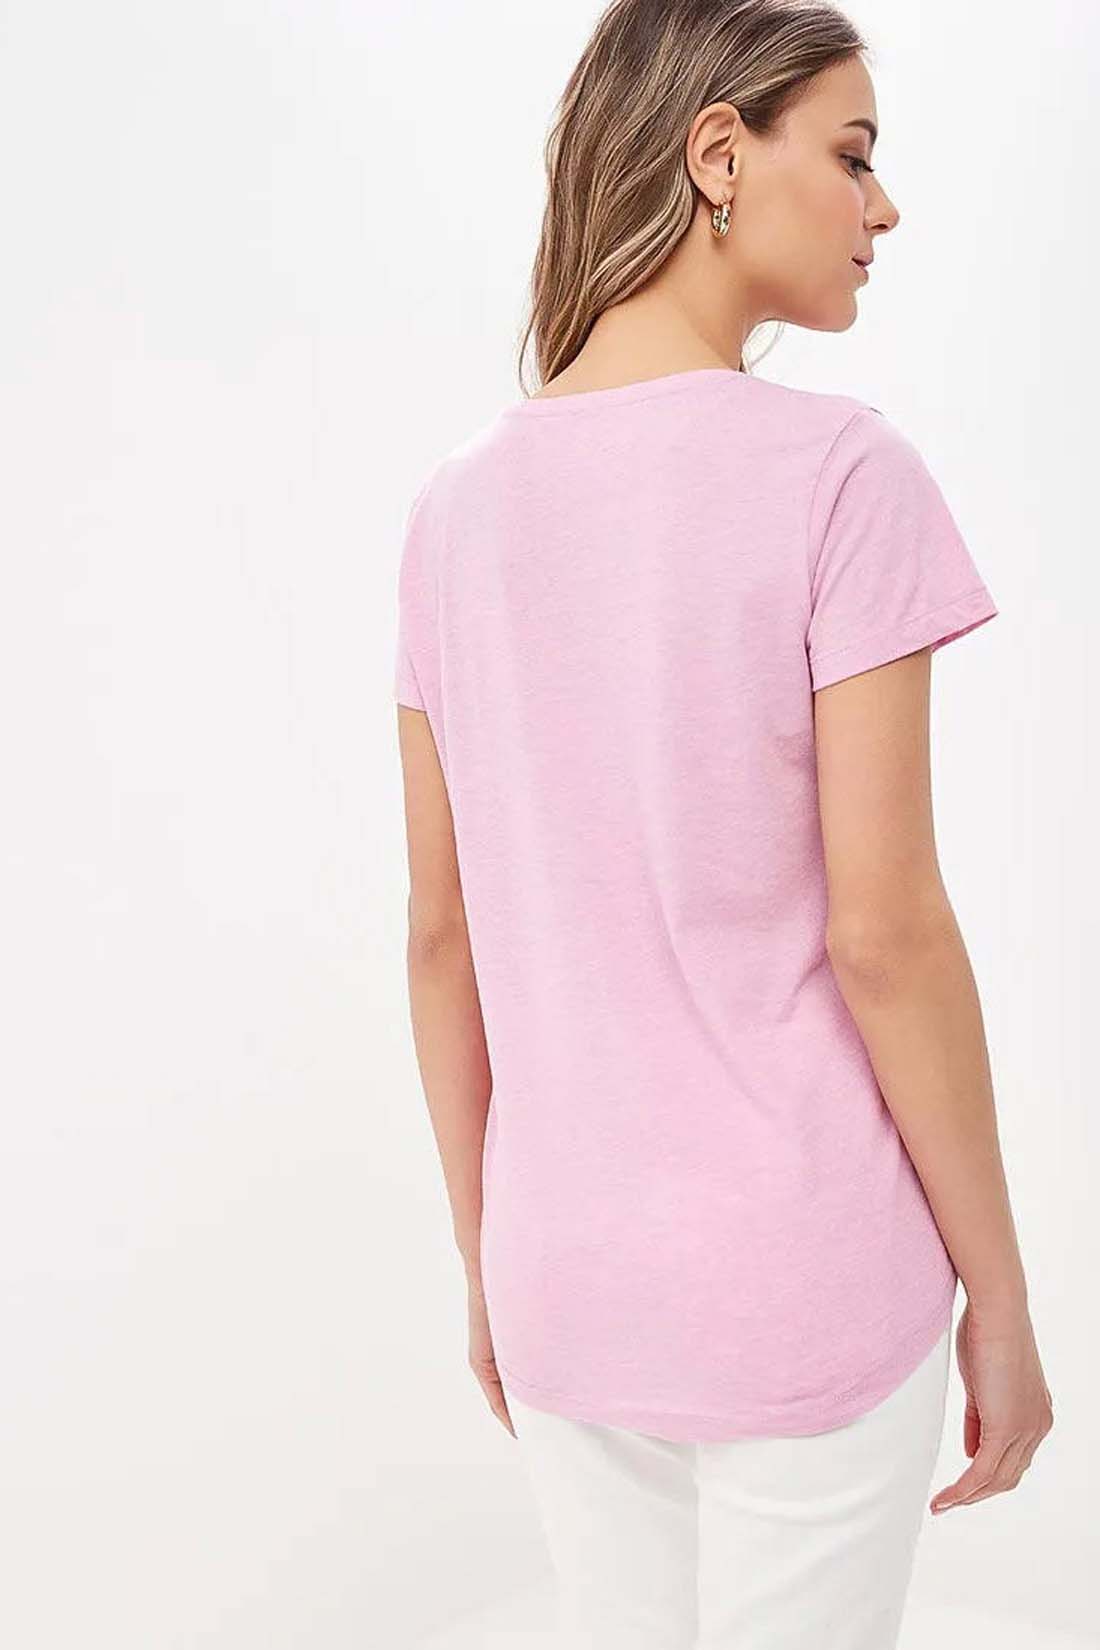 Розовая футболка с принтом (арт. baon B239079), размер L, цвет розовый Розовая футболка с принтом (арт. baon B239079) - фото 2